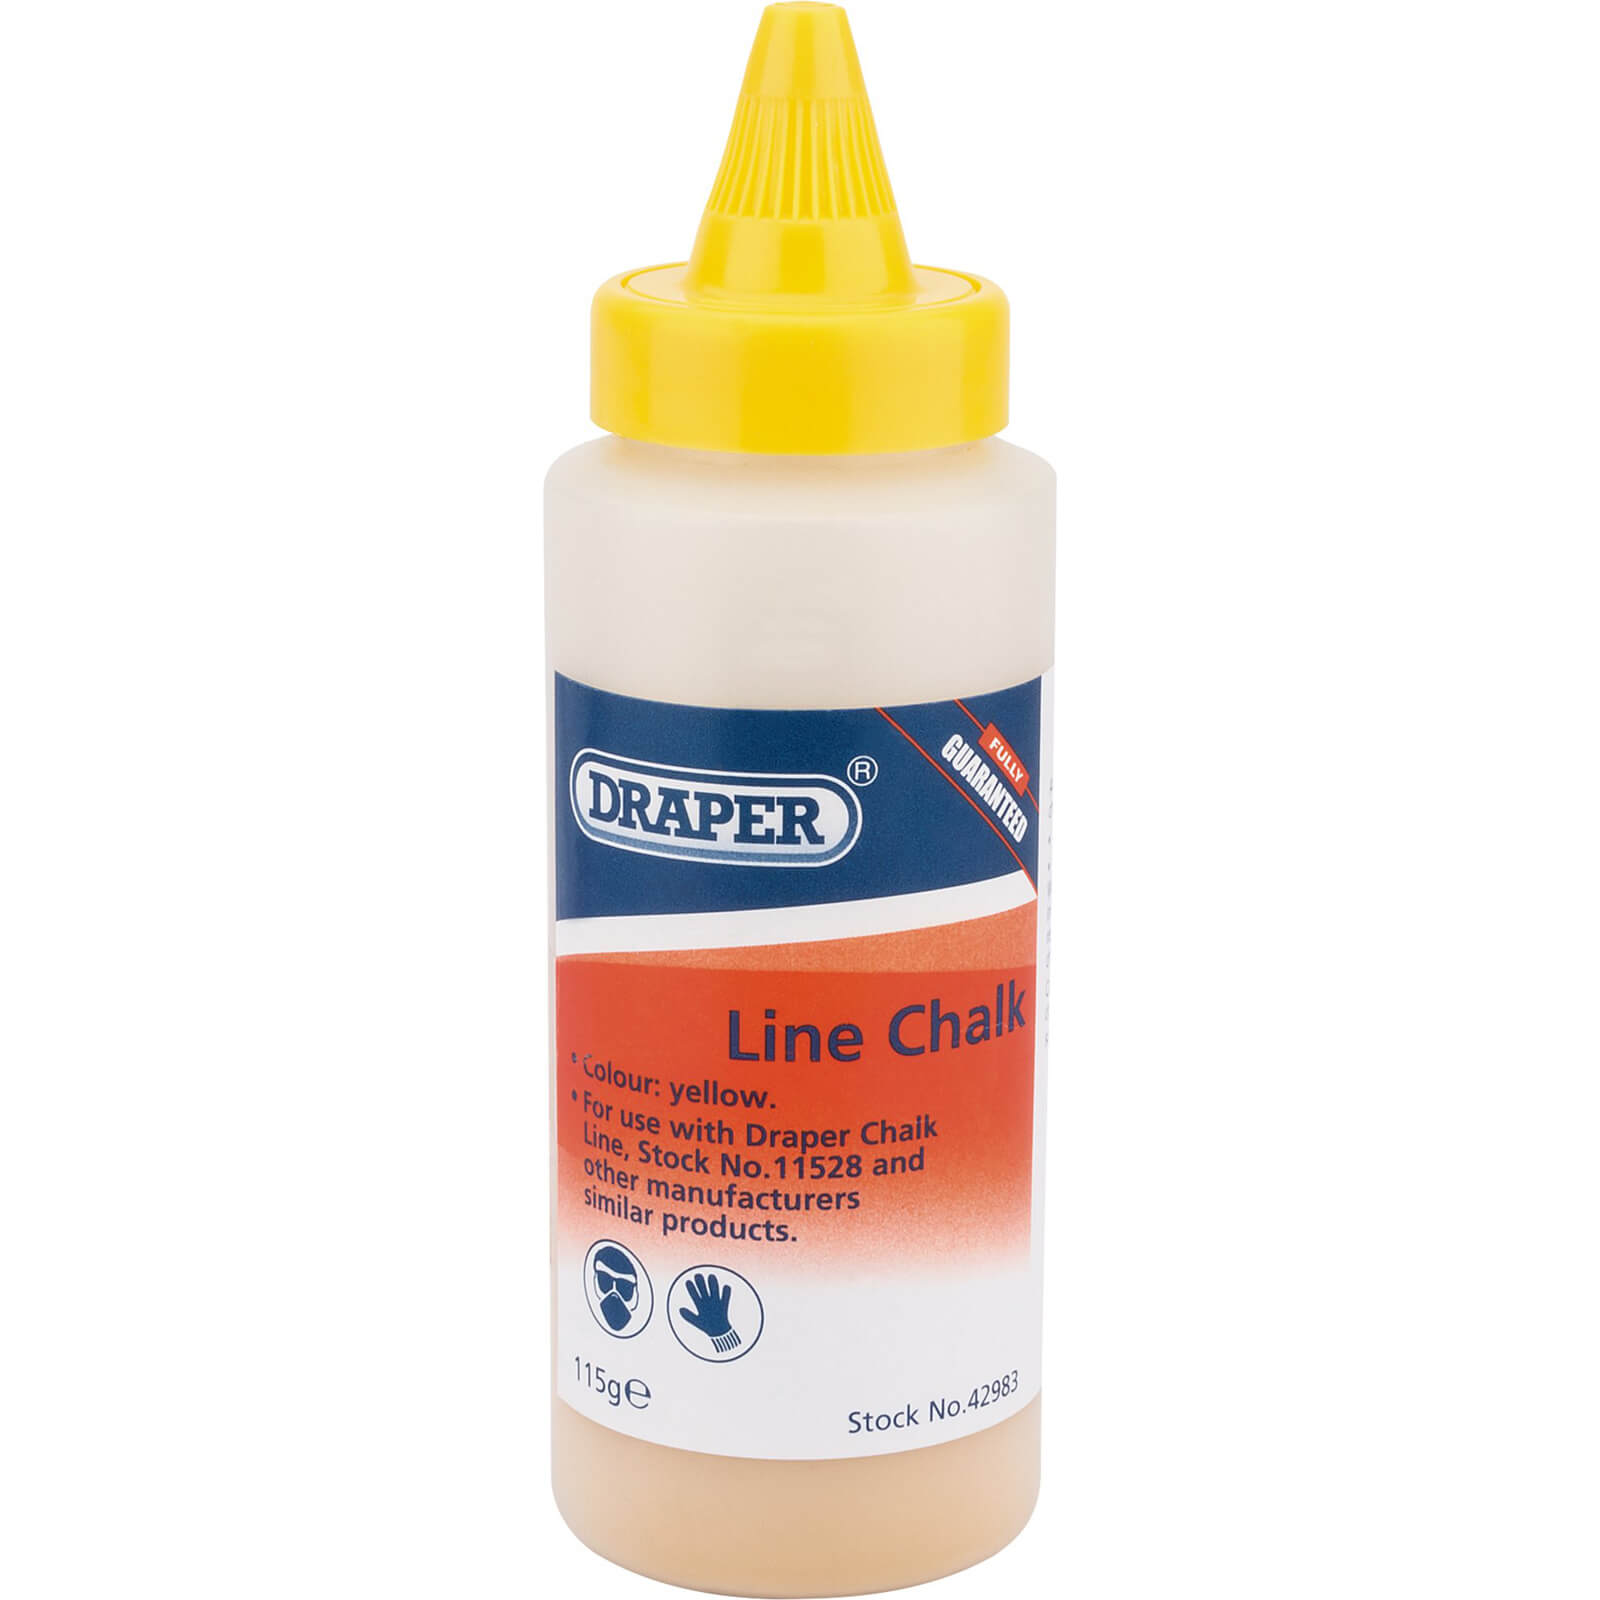 Image of Draper Chalk Line Refill Bottle Yellow